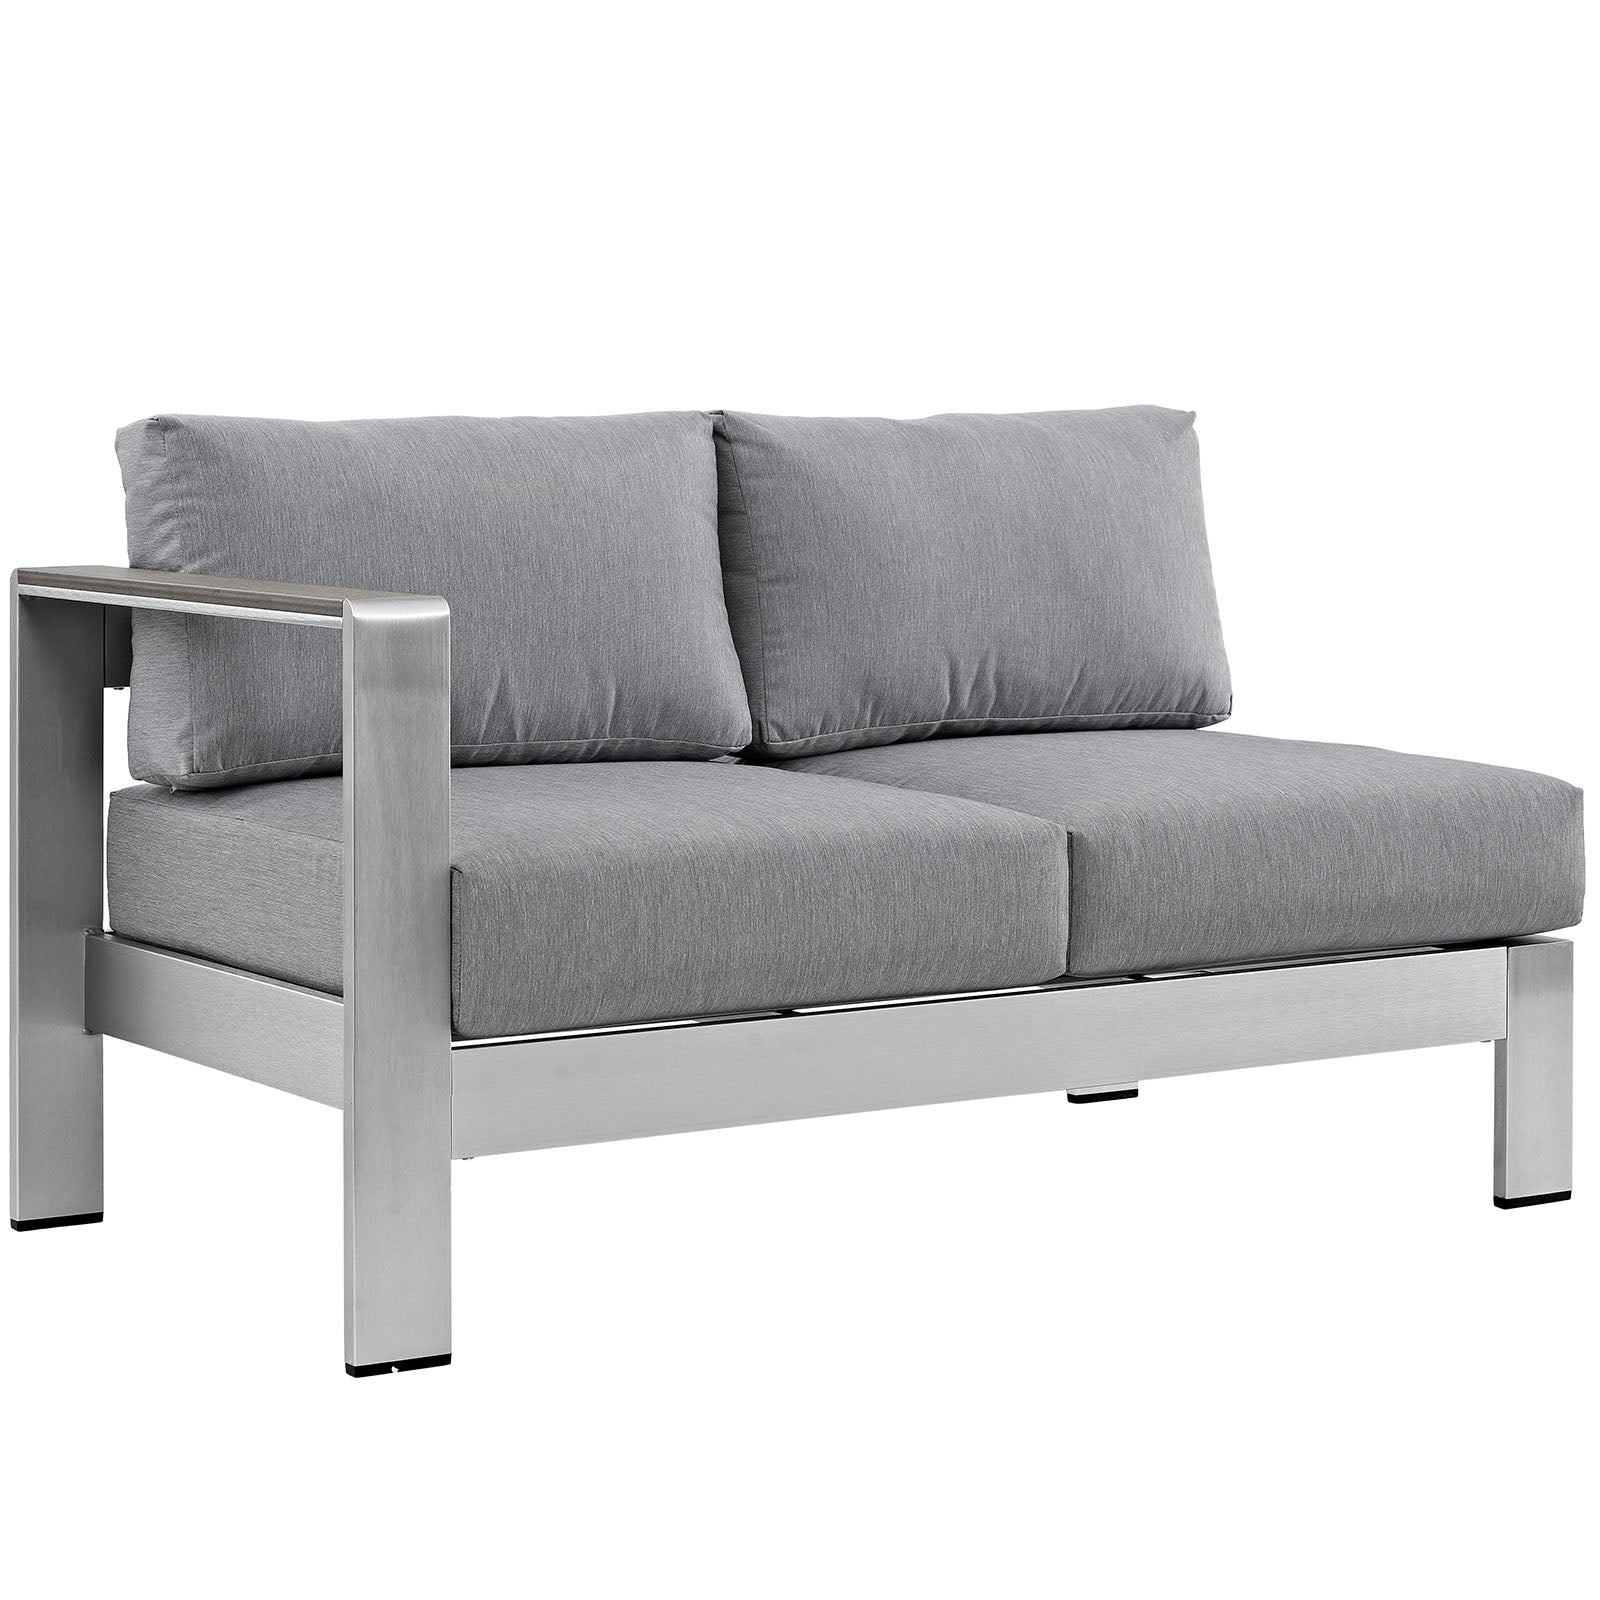 Modway Outdoor Conversation Sets - Shore 6 Piece 188.5"W Patio Aluminum Sectional Sofa Set Silver